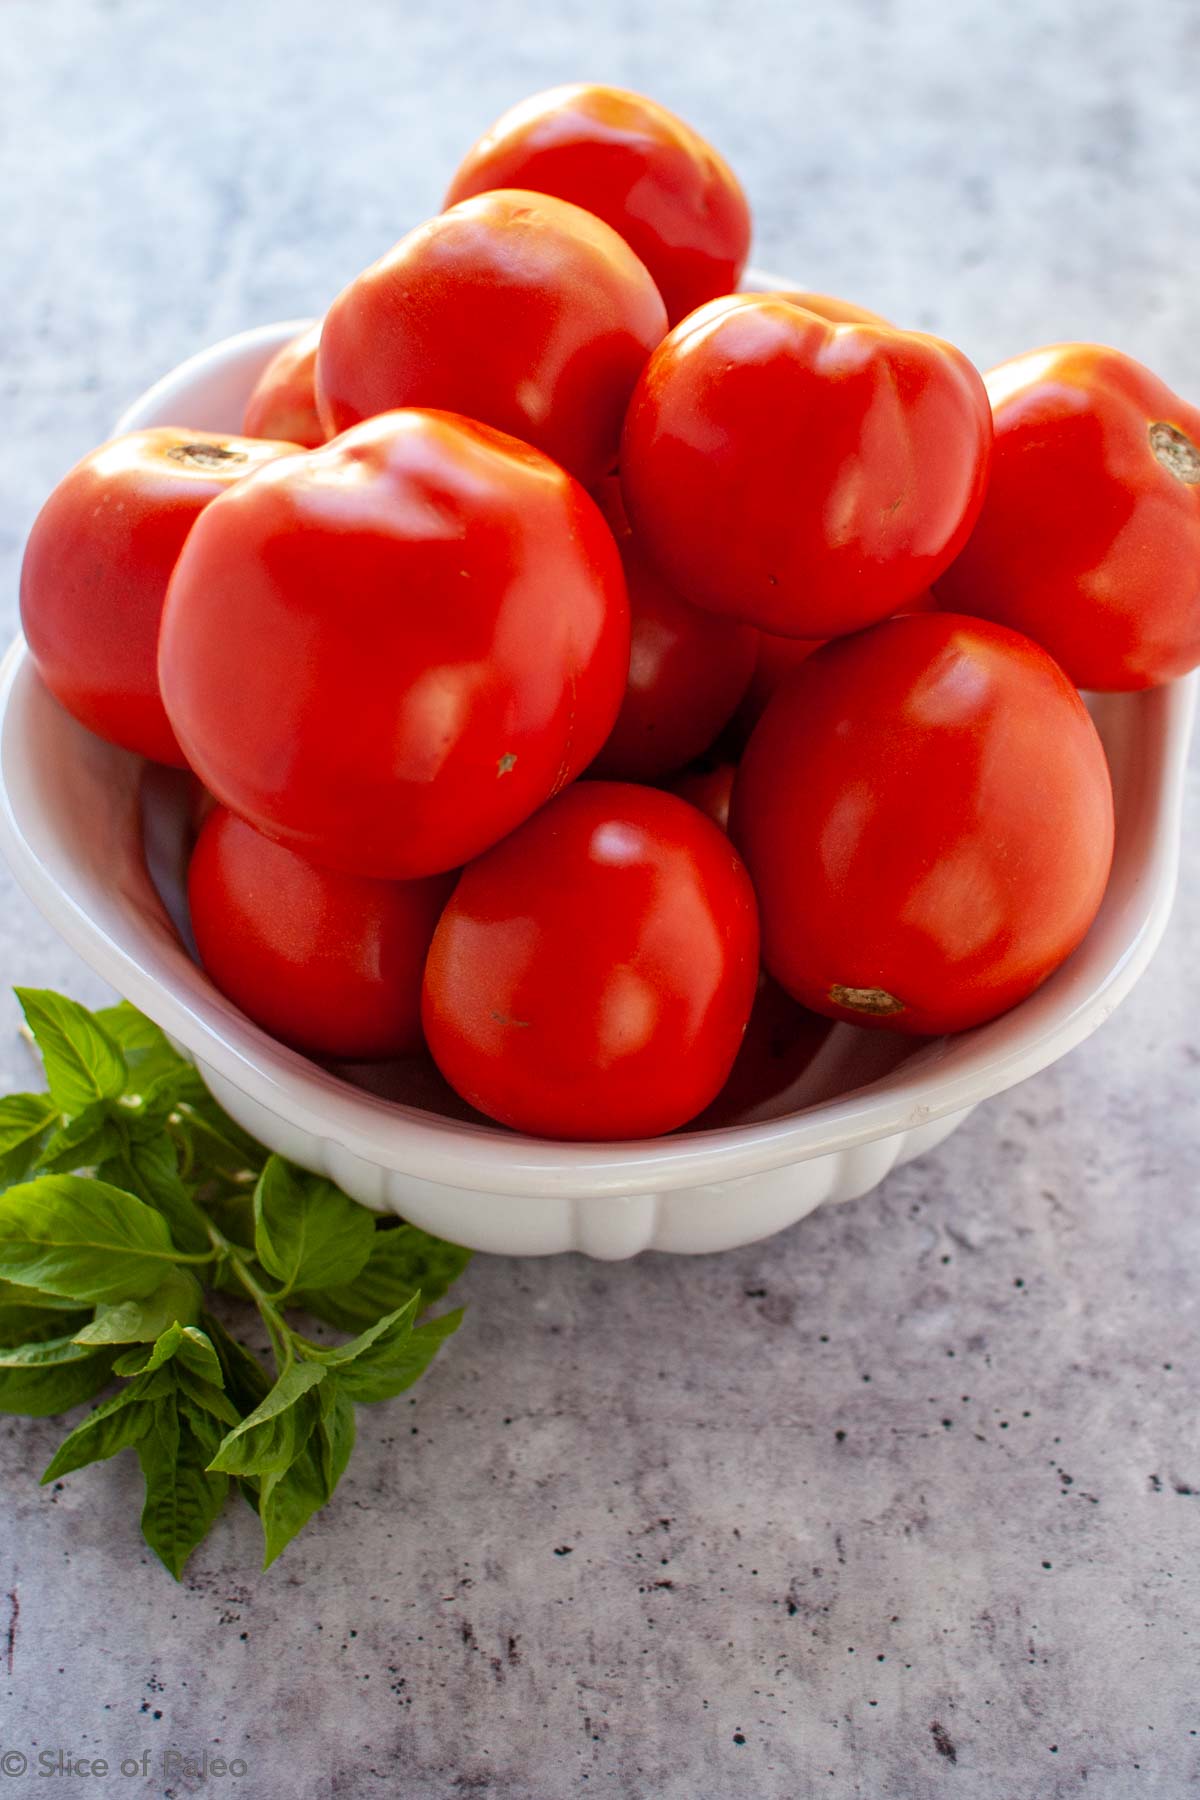 Provencal Tomatoes recipe showing whole fresh tomatoes